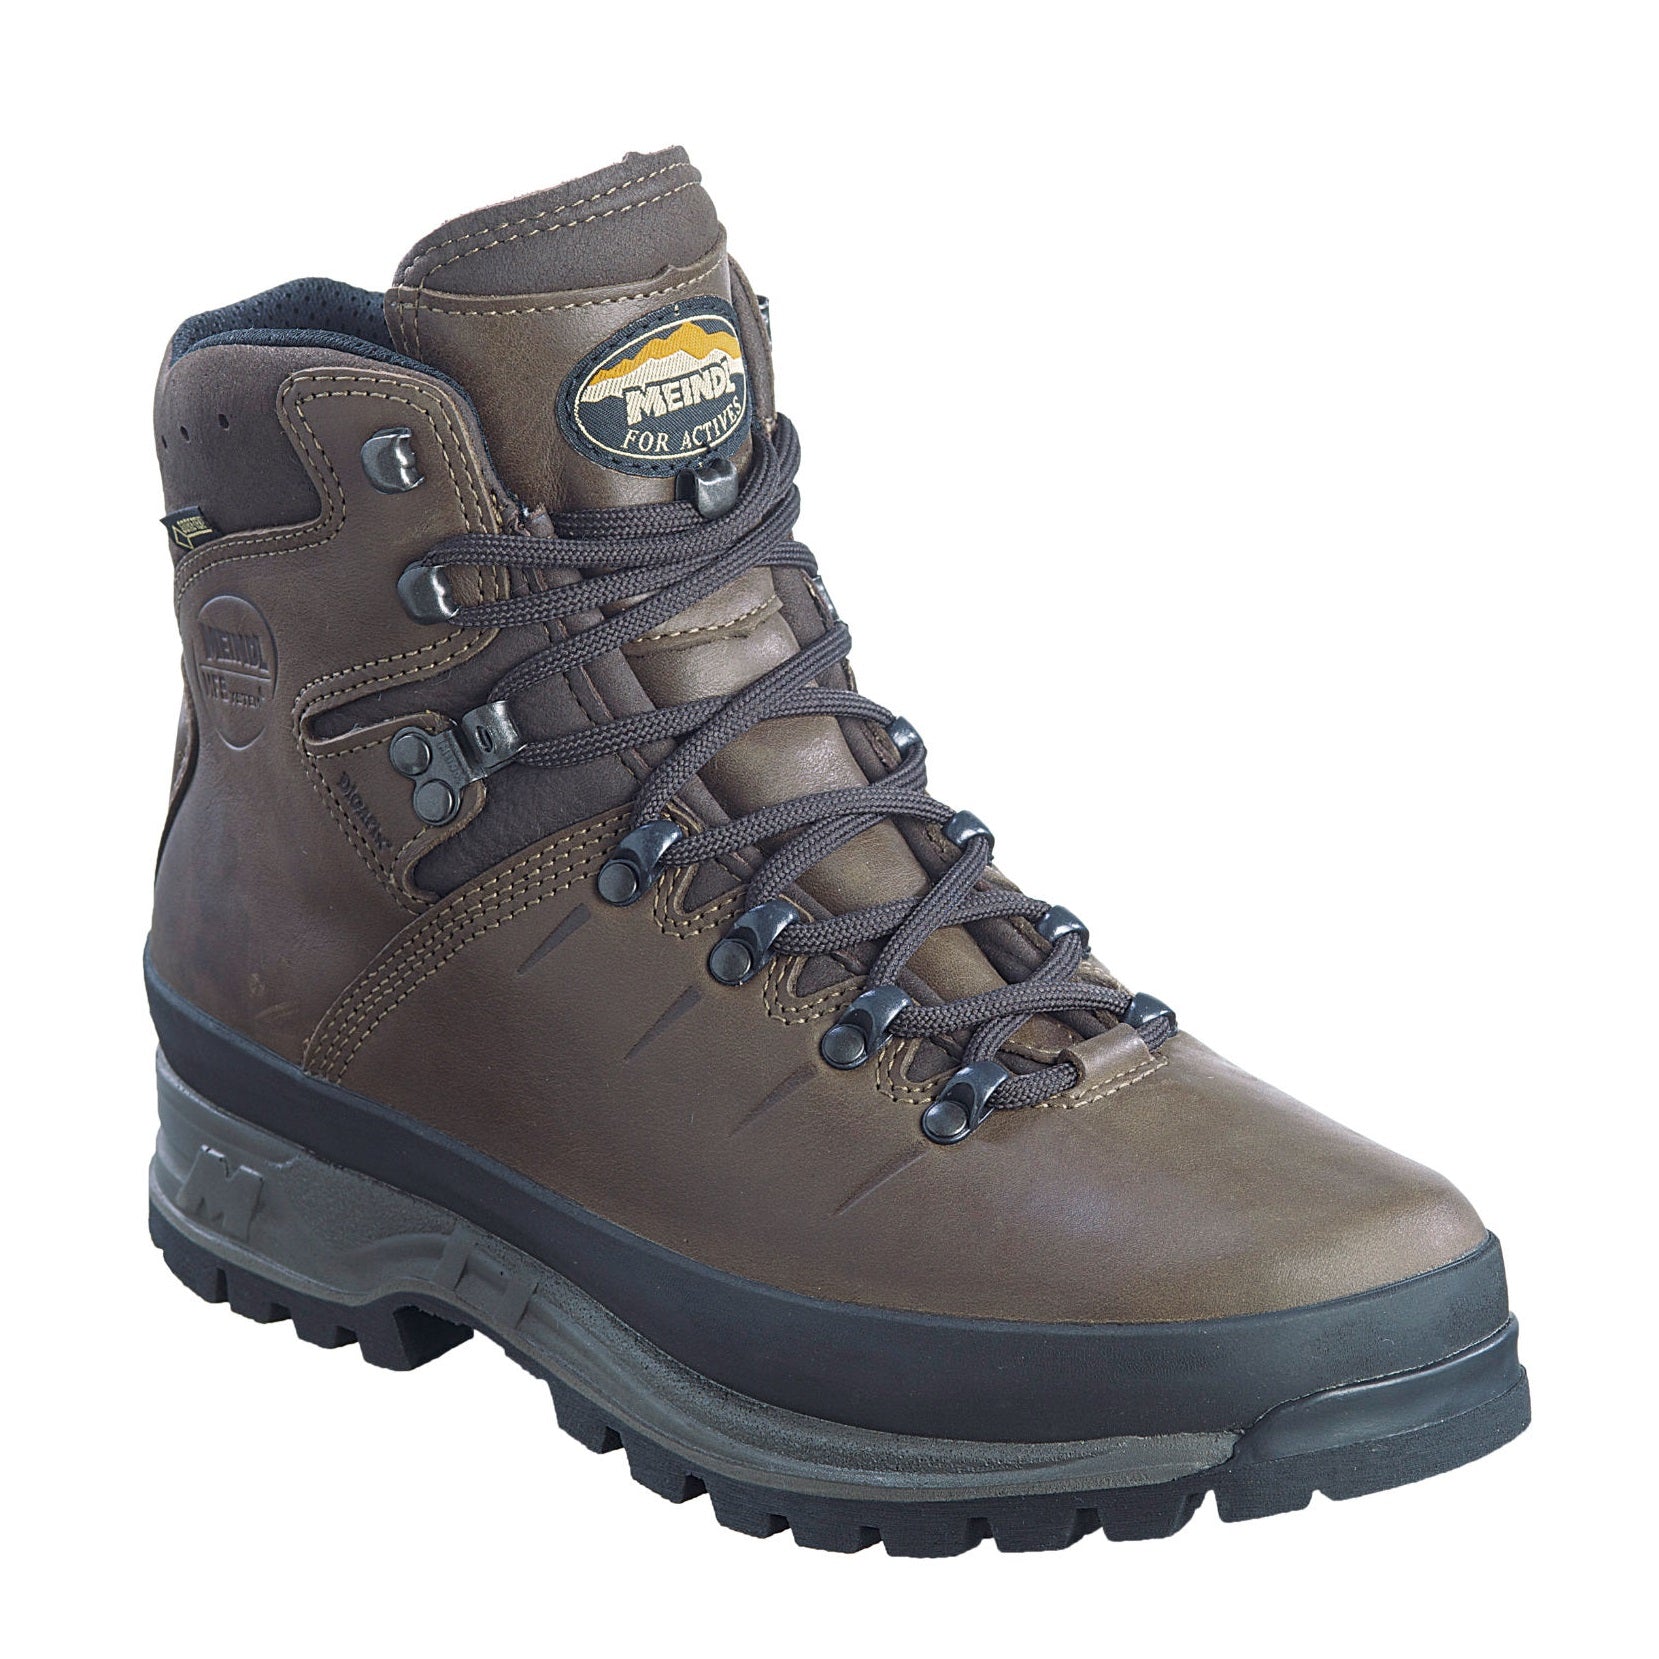 40% off - MEINDL Bhutan MFS Gore-Tex Walking Boots - Mens - Dark Brown - Size: UK 7, 10.5 & 13